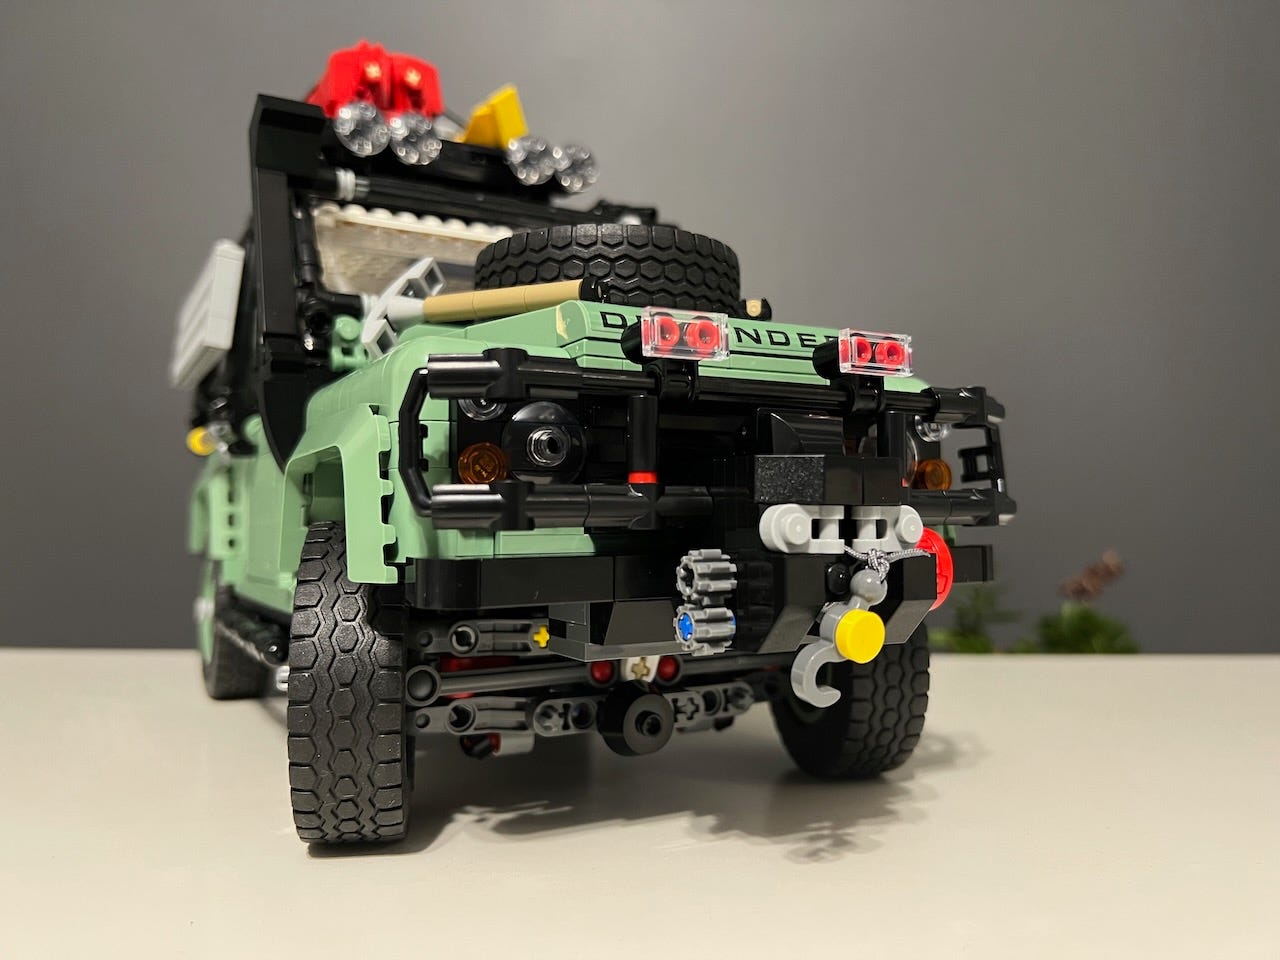 Meet The Best Creator Expert Vehicle LEGO Has Ever Made | by Attila Vágó |  Bricks n' Brackets | Medium